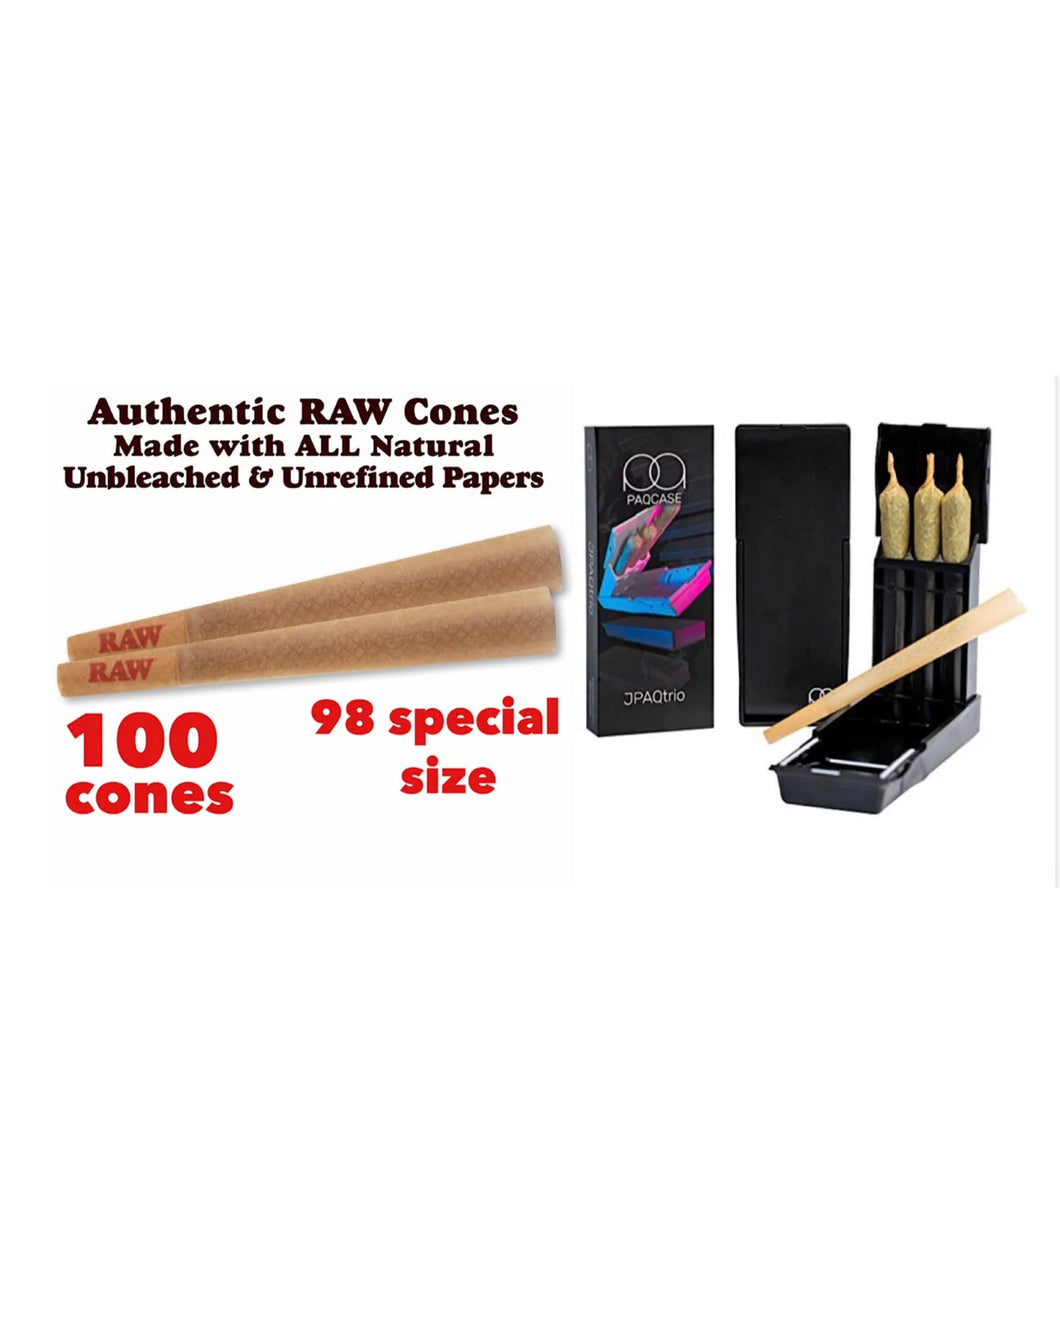 raw cone classic 98 special size pre rolled cone(100 pack)+JPAQ trio cone holder case